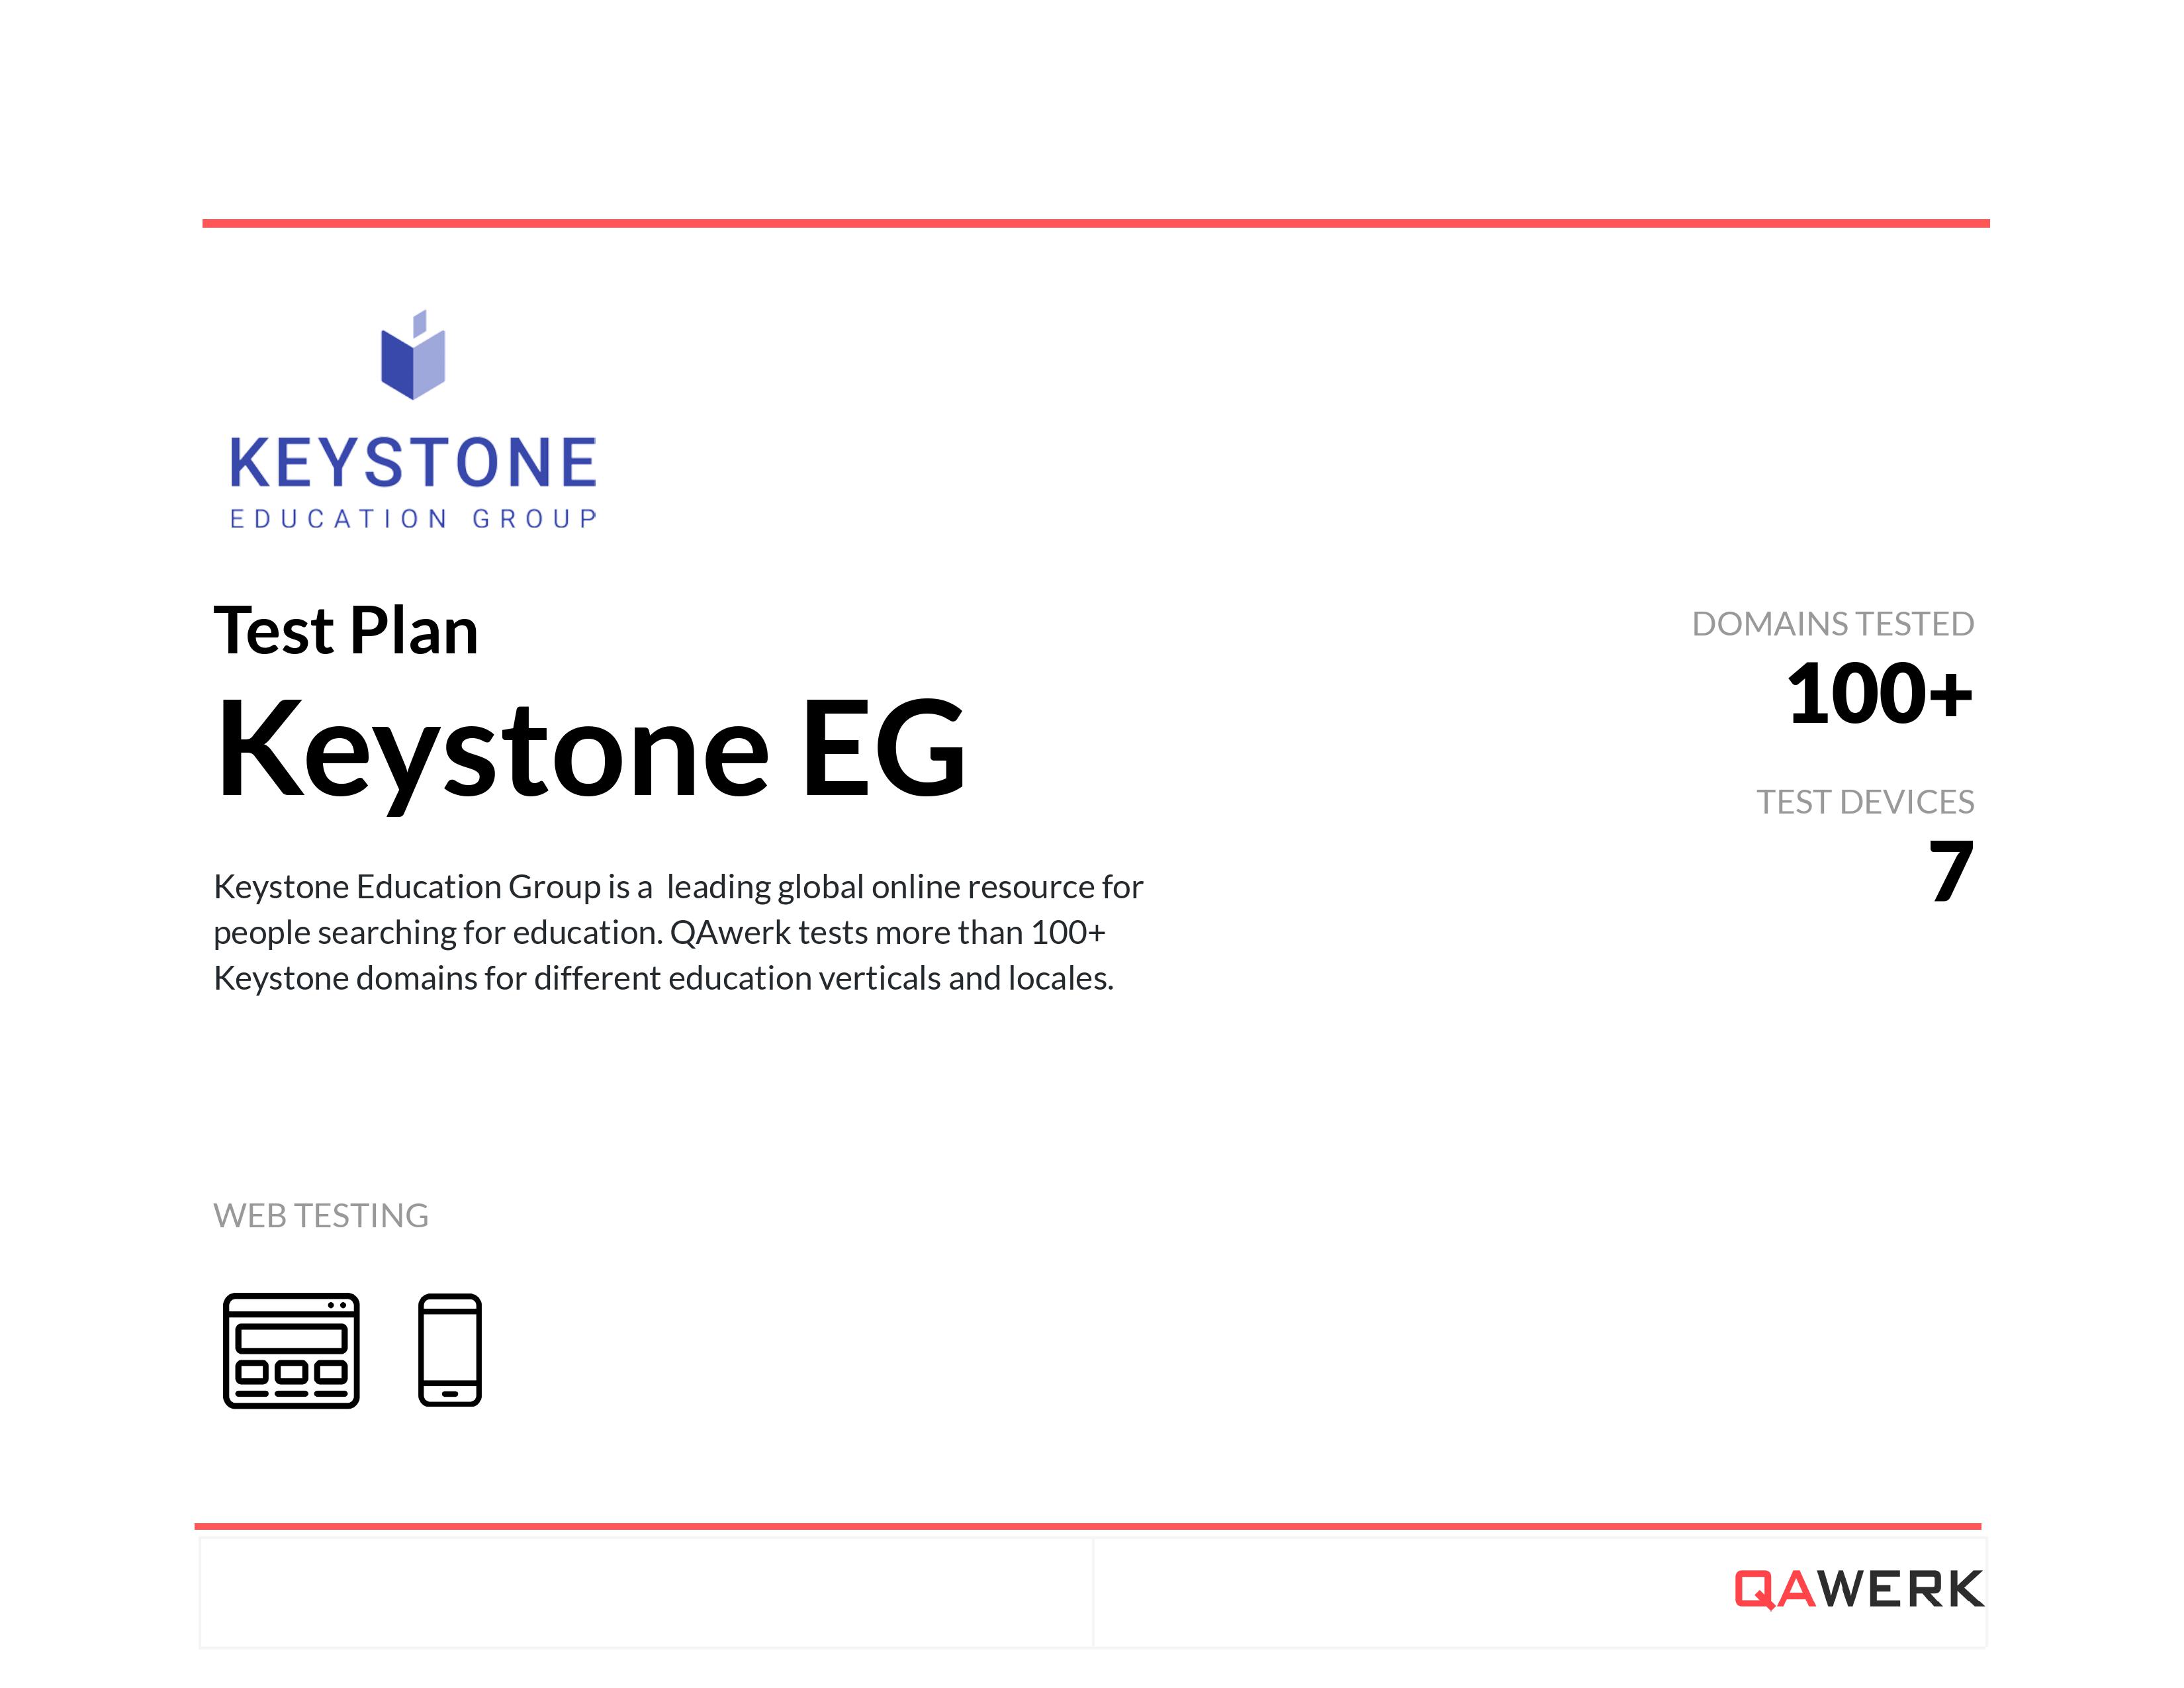 Keystone test plan